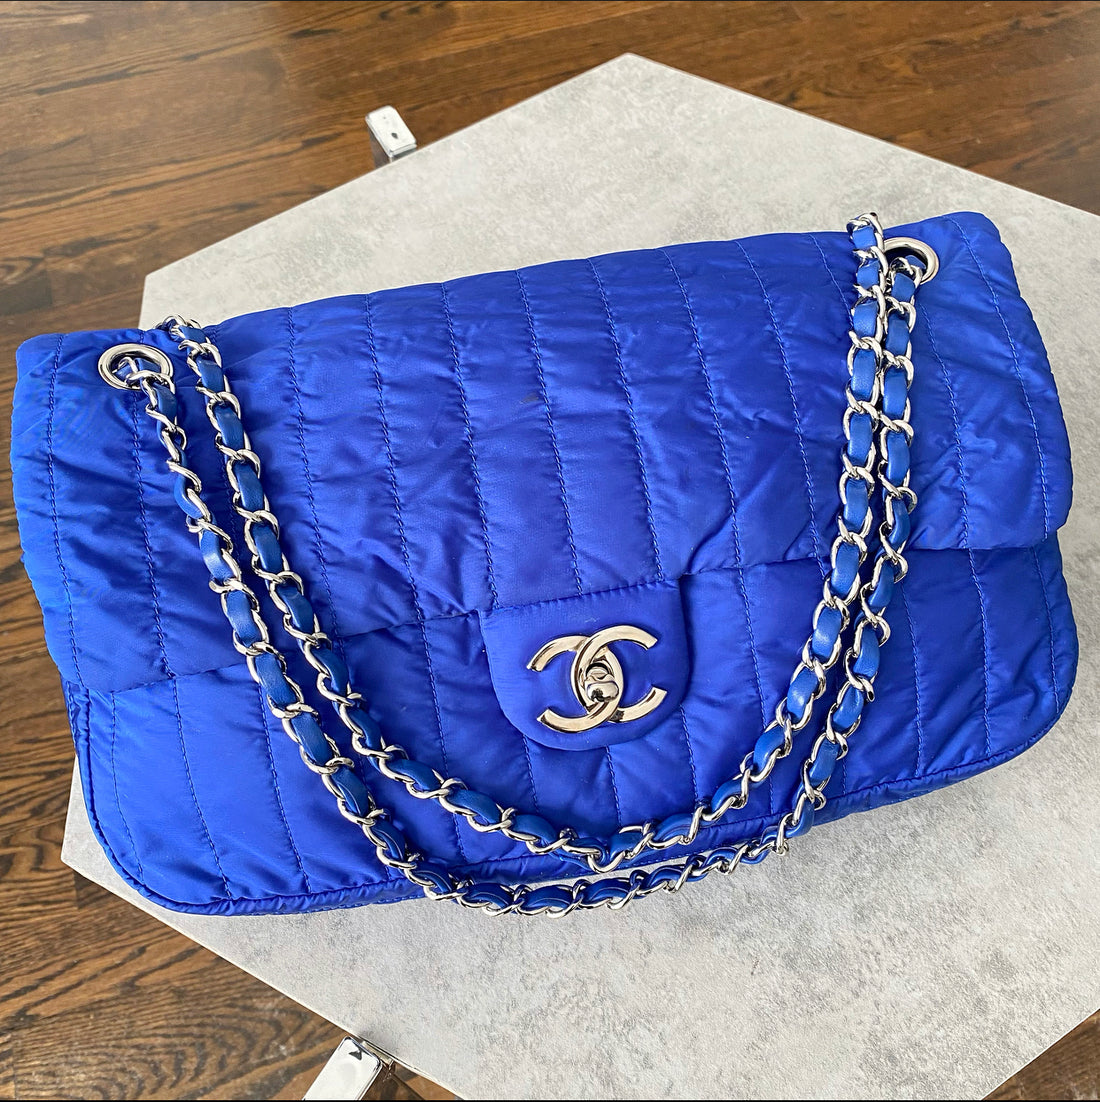 Chanel Classic Flap Quilted Microfiber Acqua Blue Nylon Shoulder Bag